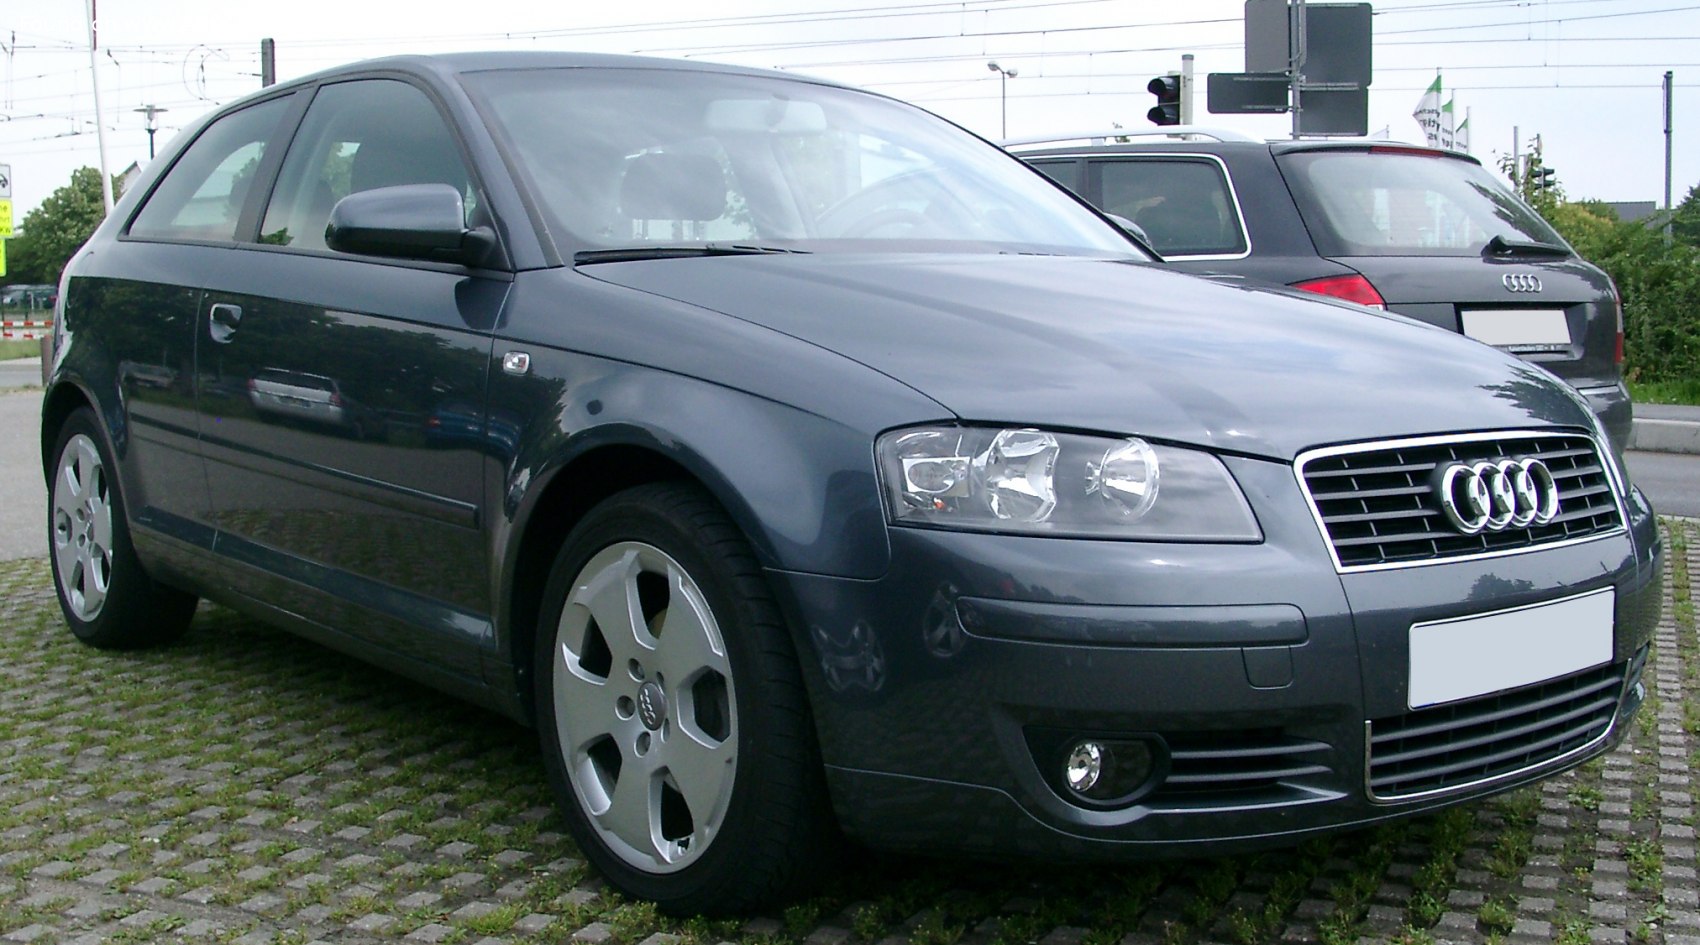 2003 Audi A3 (8P) 1.6 (102 CV) tiptronic